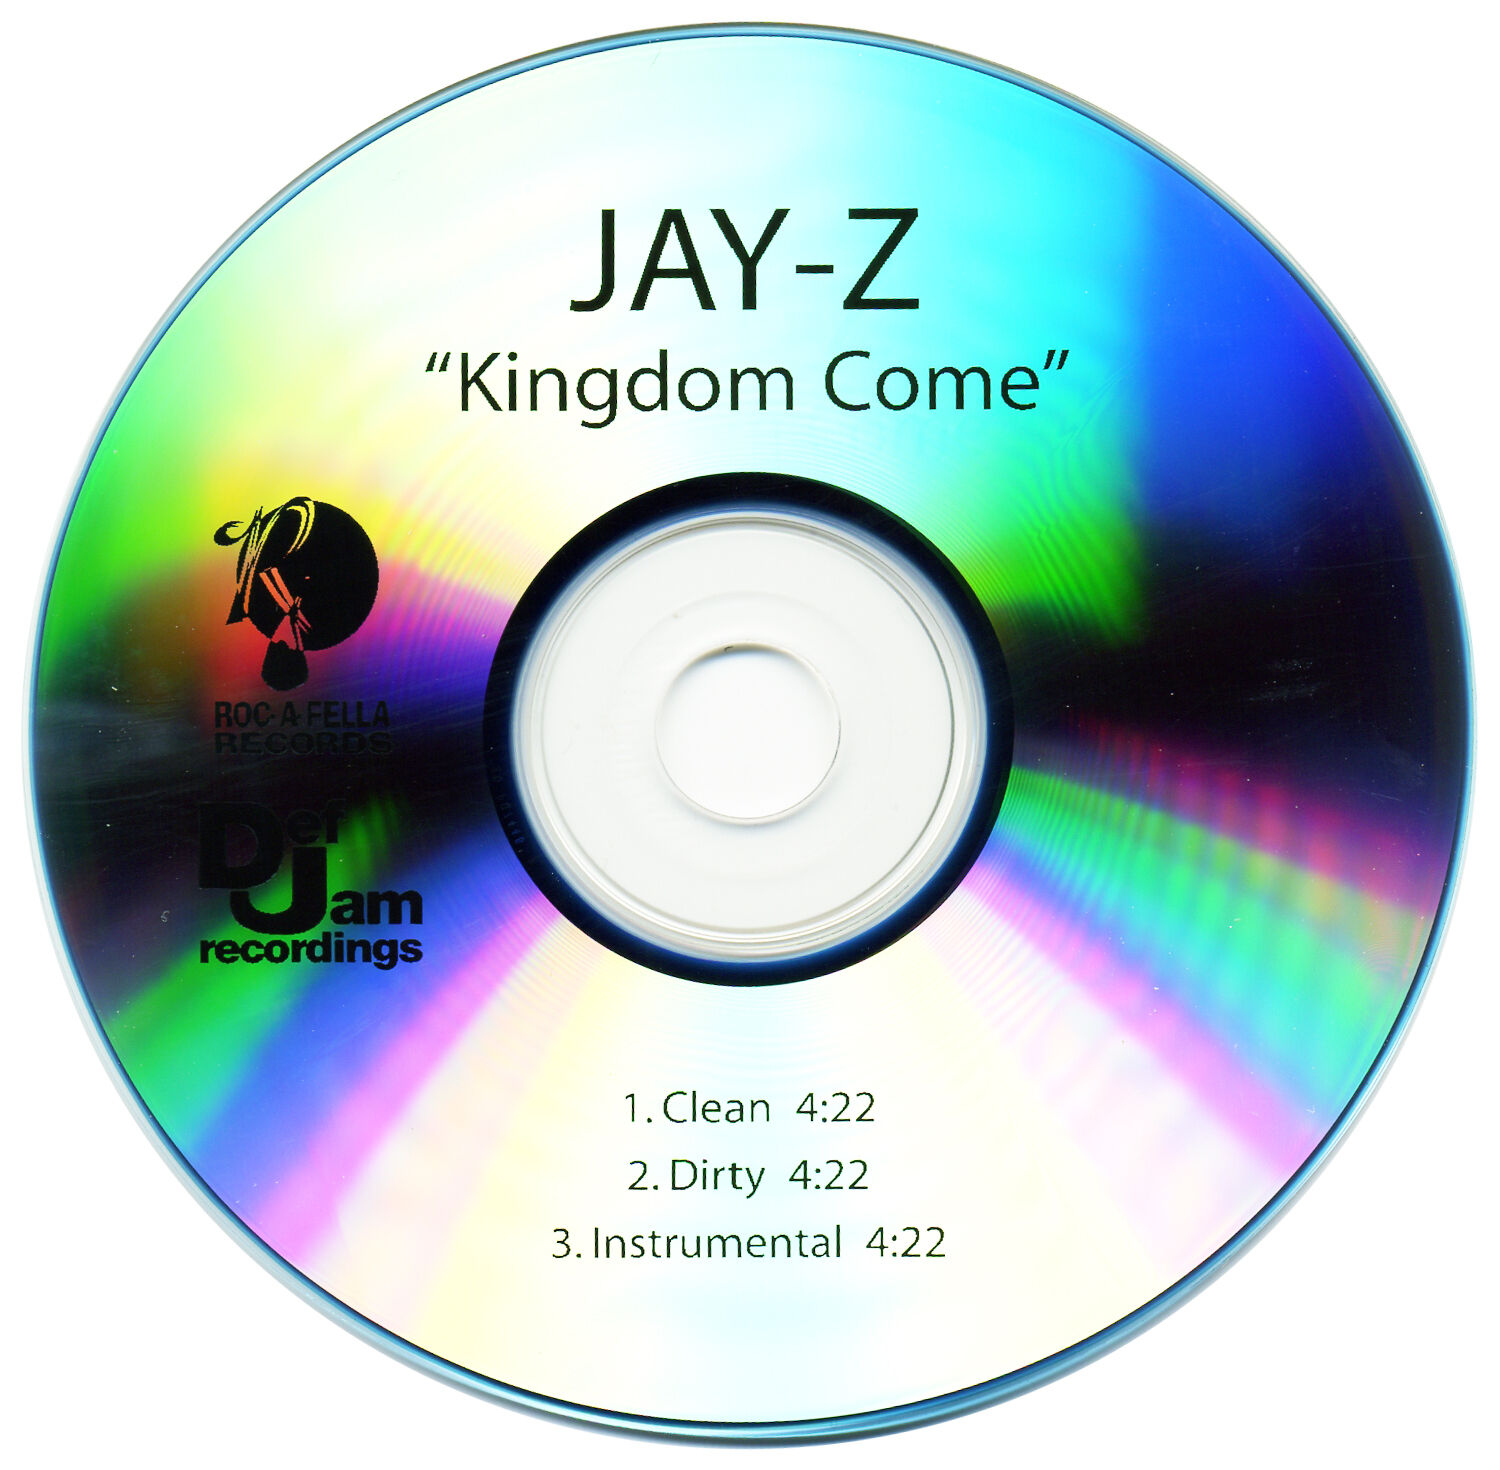 Maxi cd. Jay-z Kingdom come. Jay-z "Kingdom come (CD)". Сингл это в Музыке. Phantomas CD Maxi.